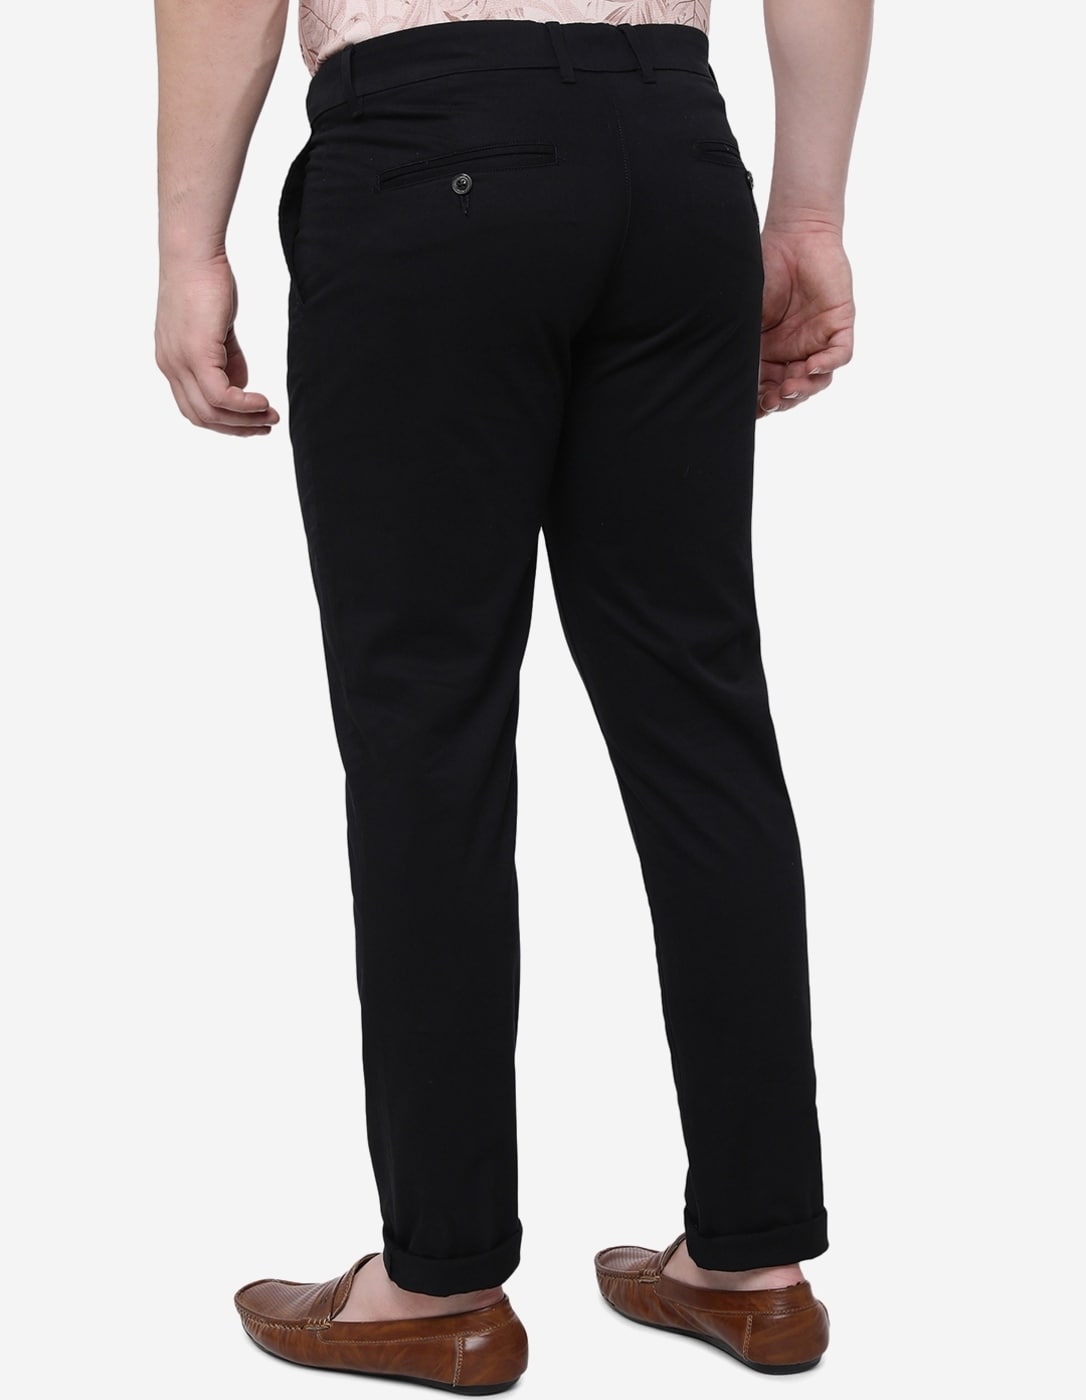 Buy Blue Trousers & Pants for Men by TURTLE Online | Ajio.com